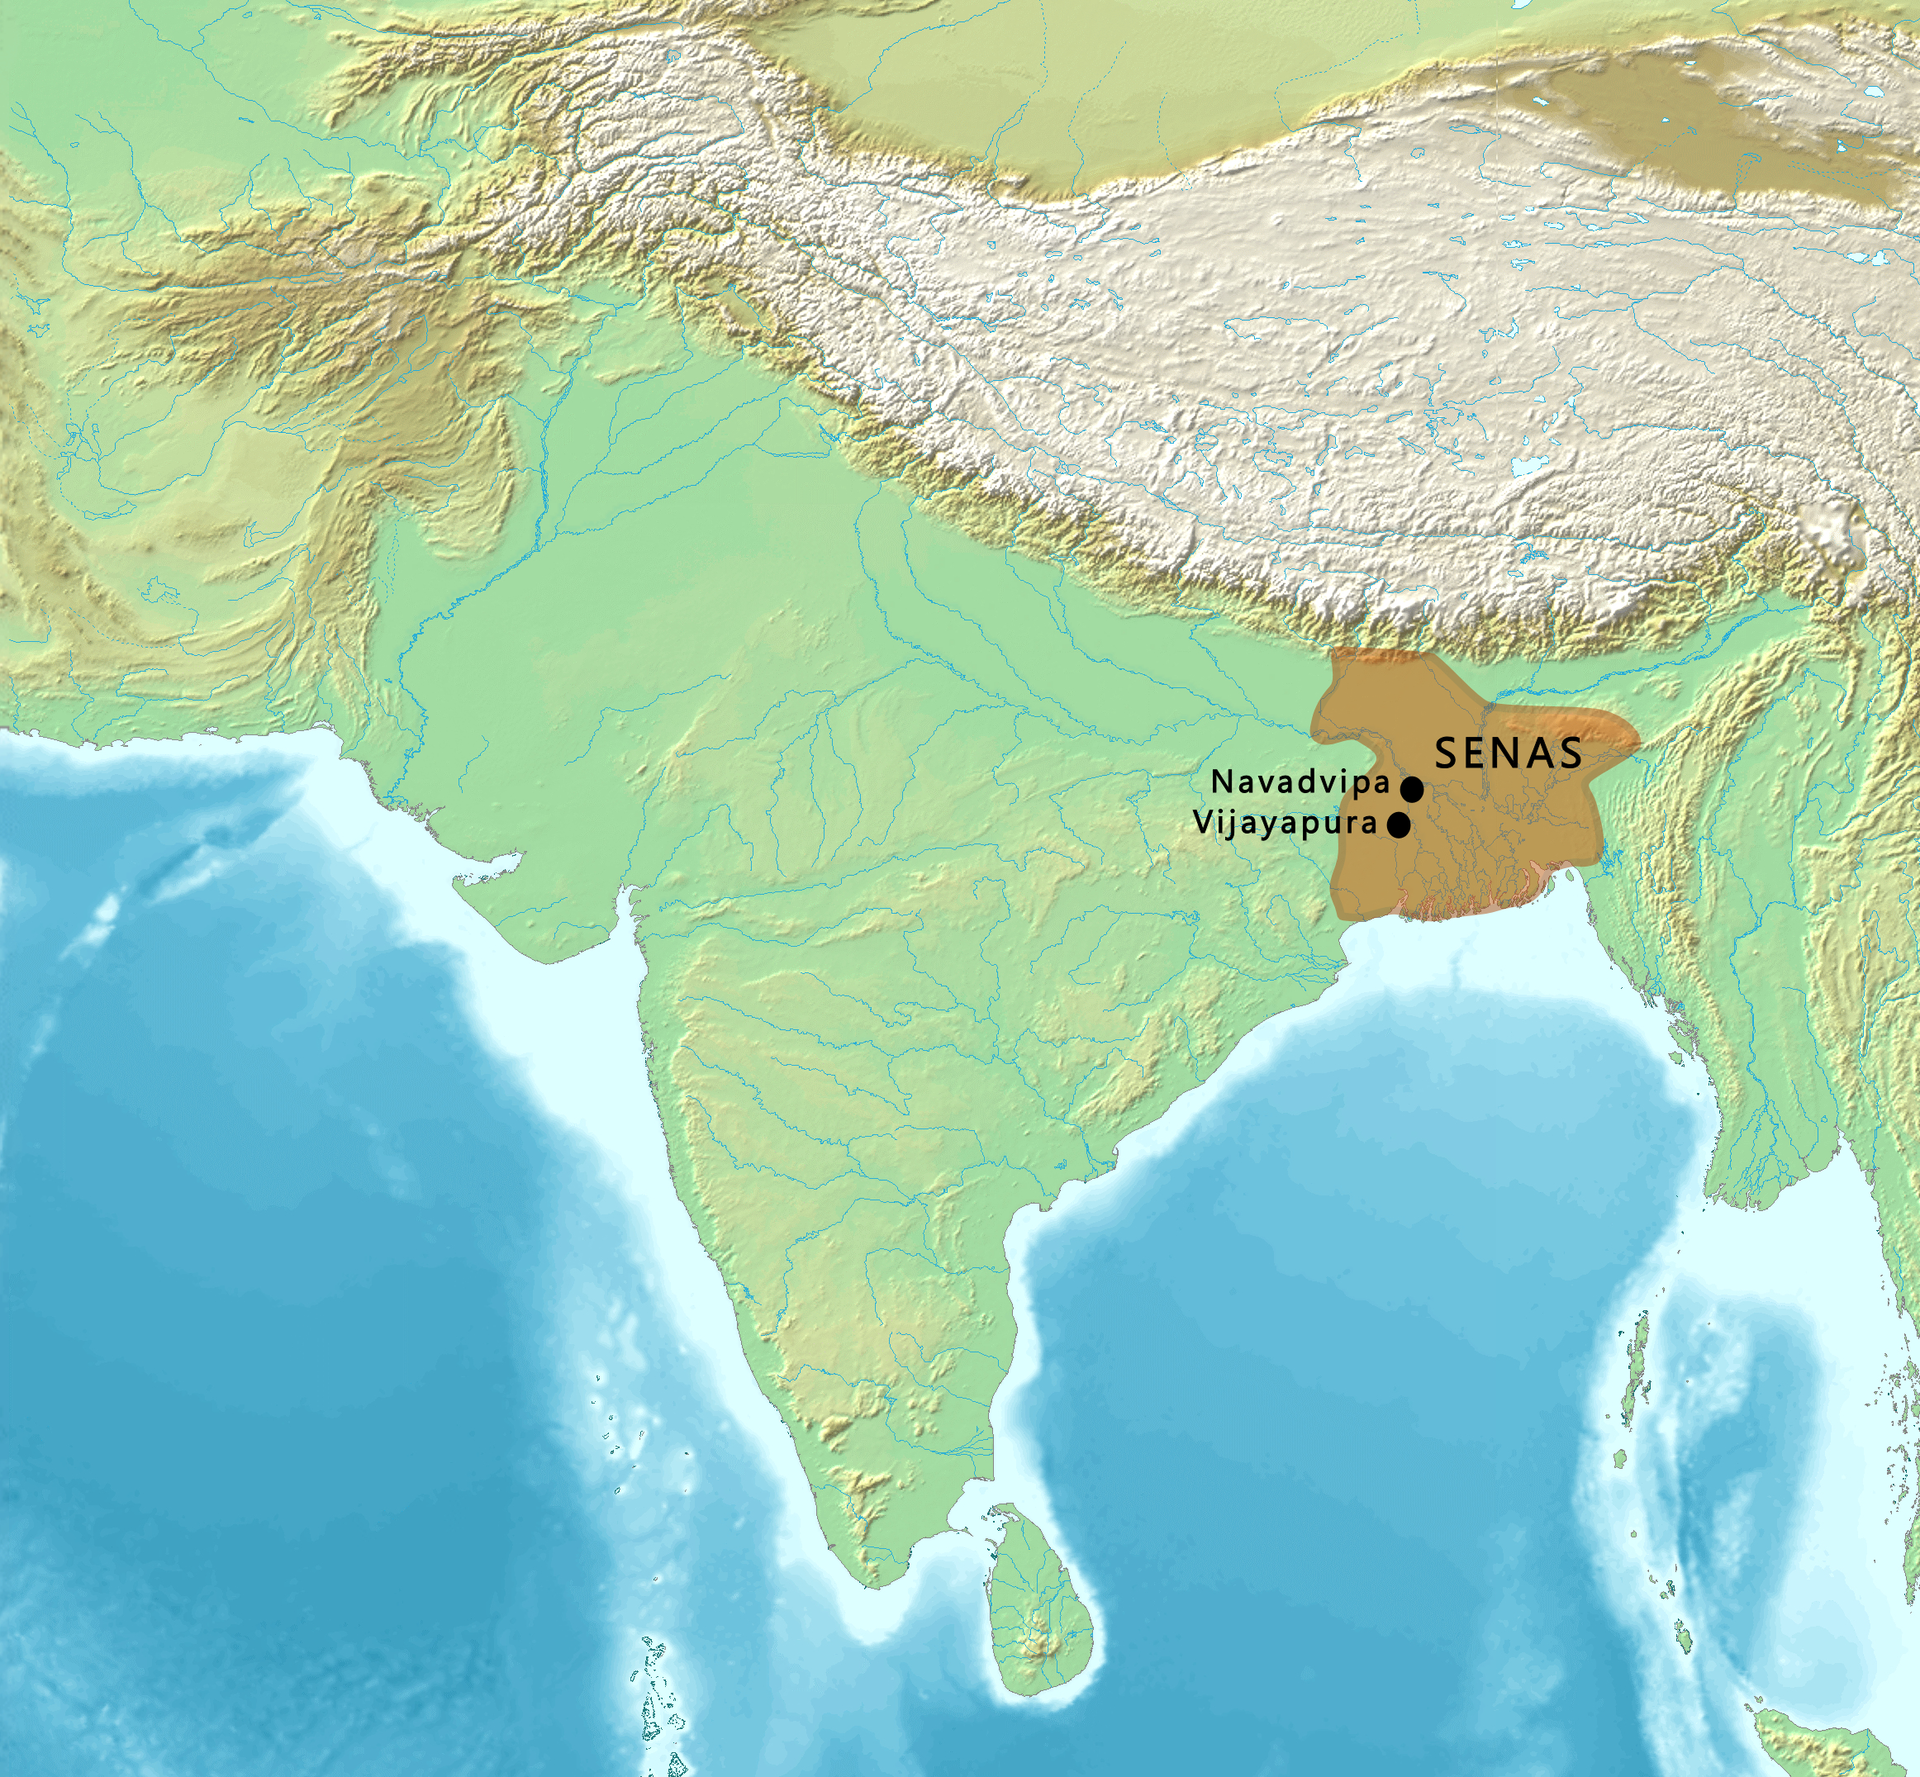 Map of the Sena Empire | Sena Dynasty (11th to 12th CE) |UPSC Prelims | Medieval History